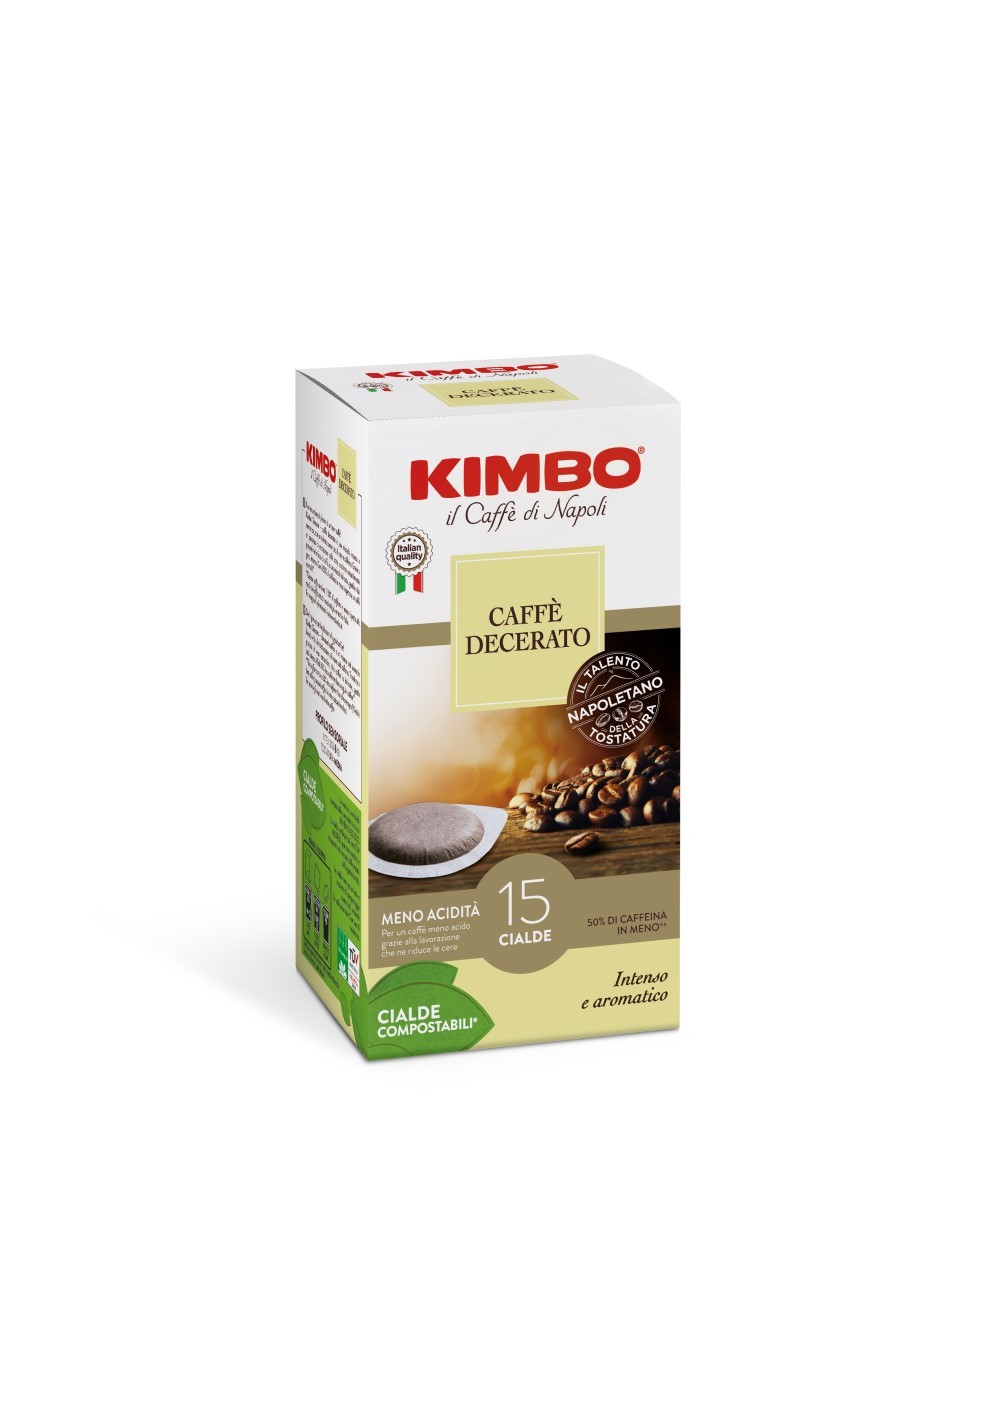 Kimbo protagonista al Cosmofarma 2022 con Kimbo caffè decerato